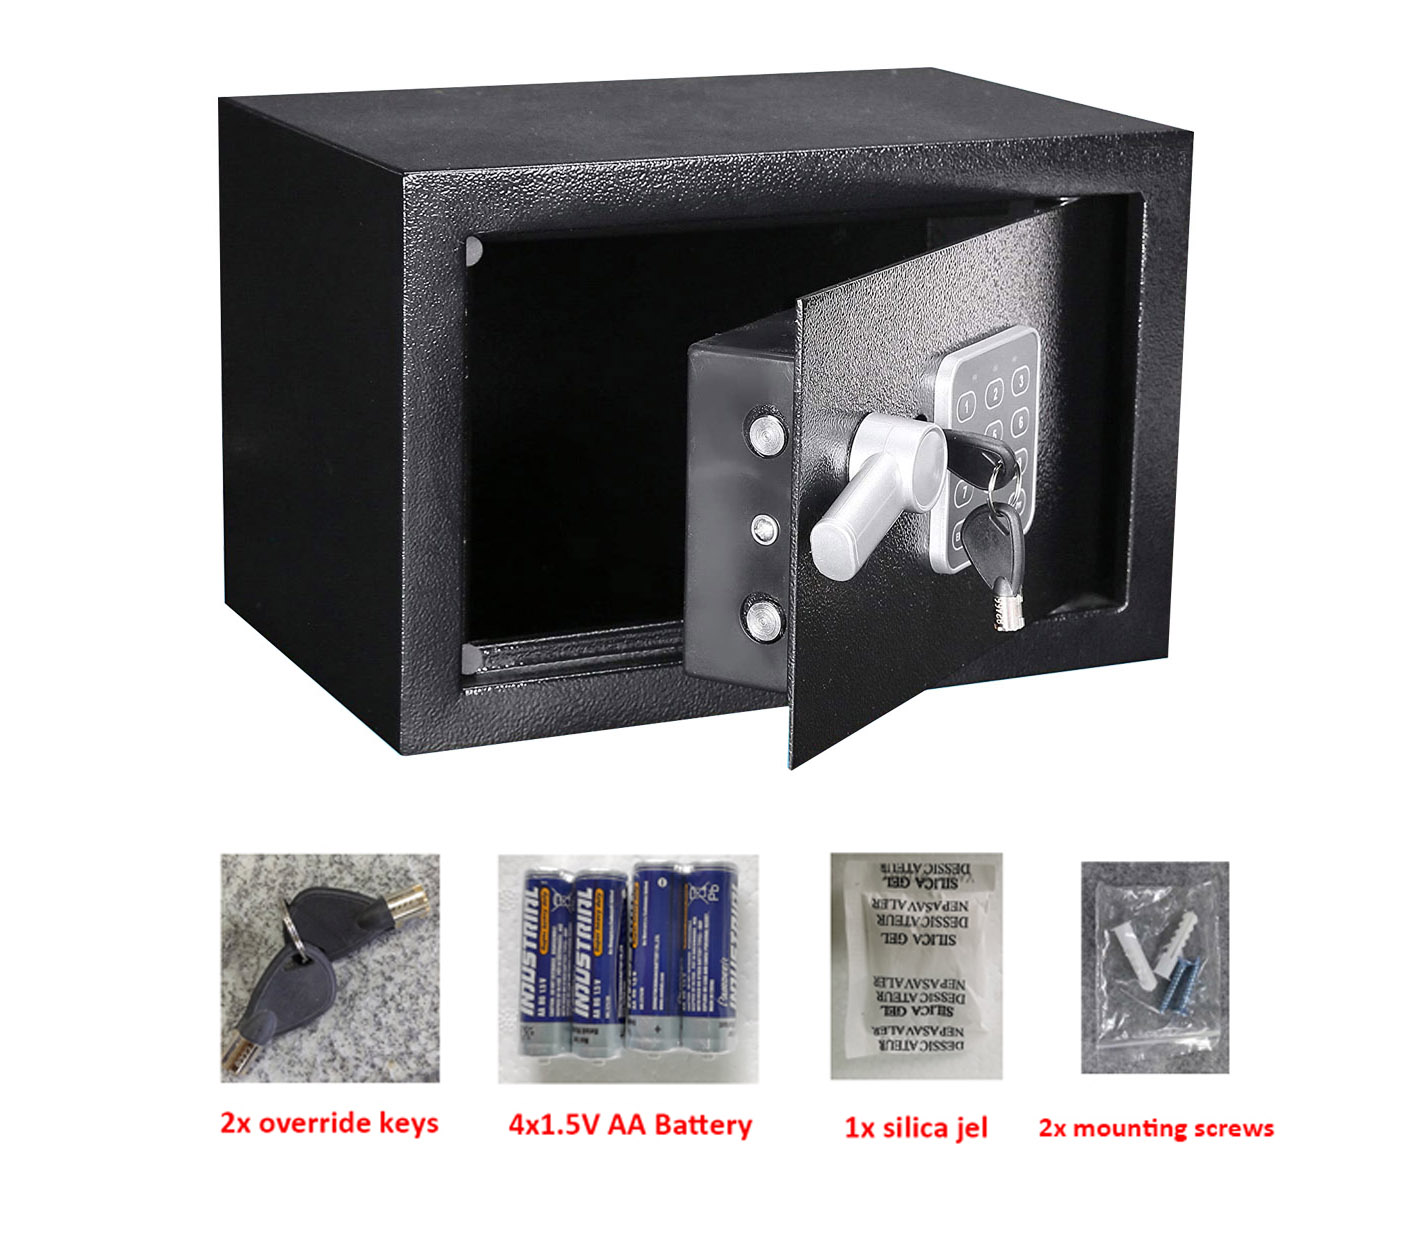 Mingyou 17SEI Steel Electronic Modern Safes Mini Home Digital Safe Box Price Small Caja Fuerte